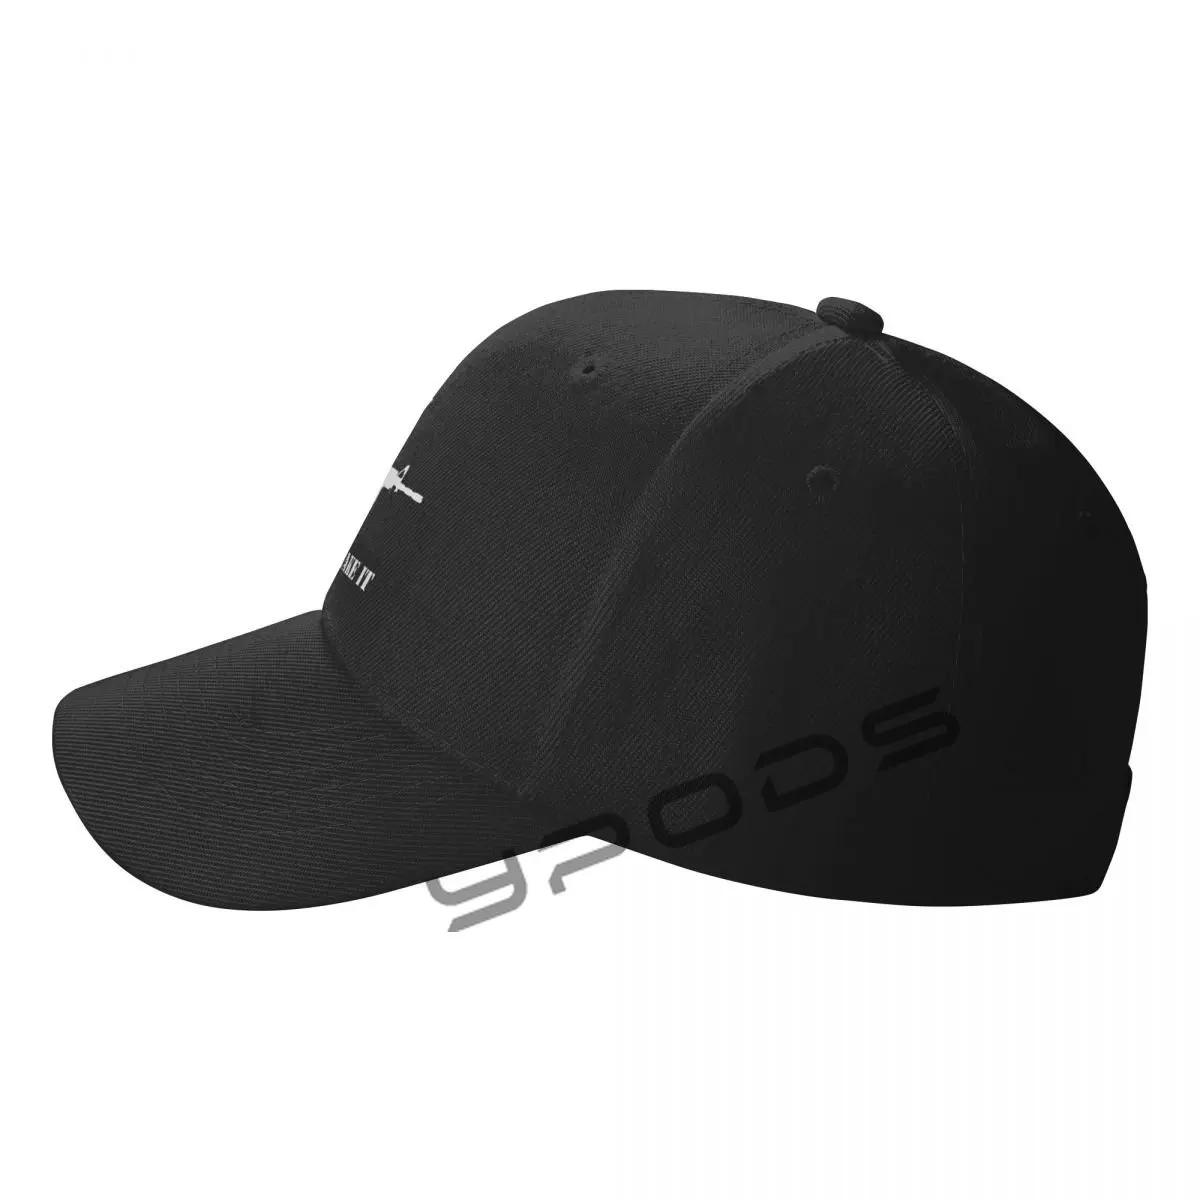 Ar 15 M16 Machind אקדח כובע בייסבול עבור נשים גברים כובע Snapback Casquette פאטאל אופנת רחוב מגן השמש